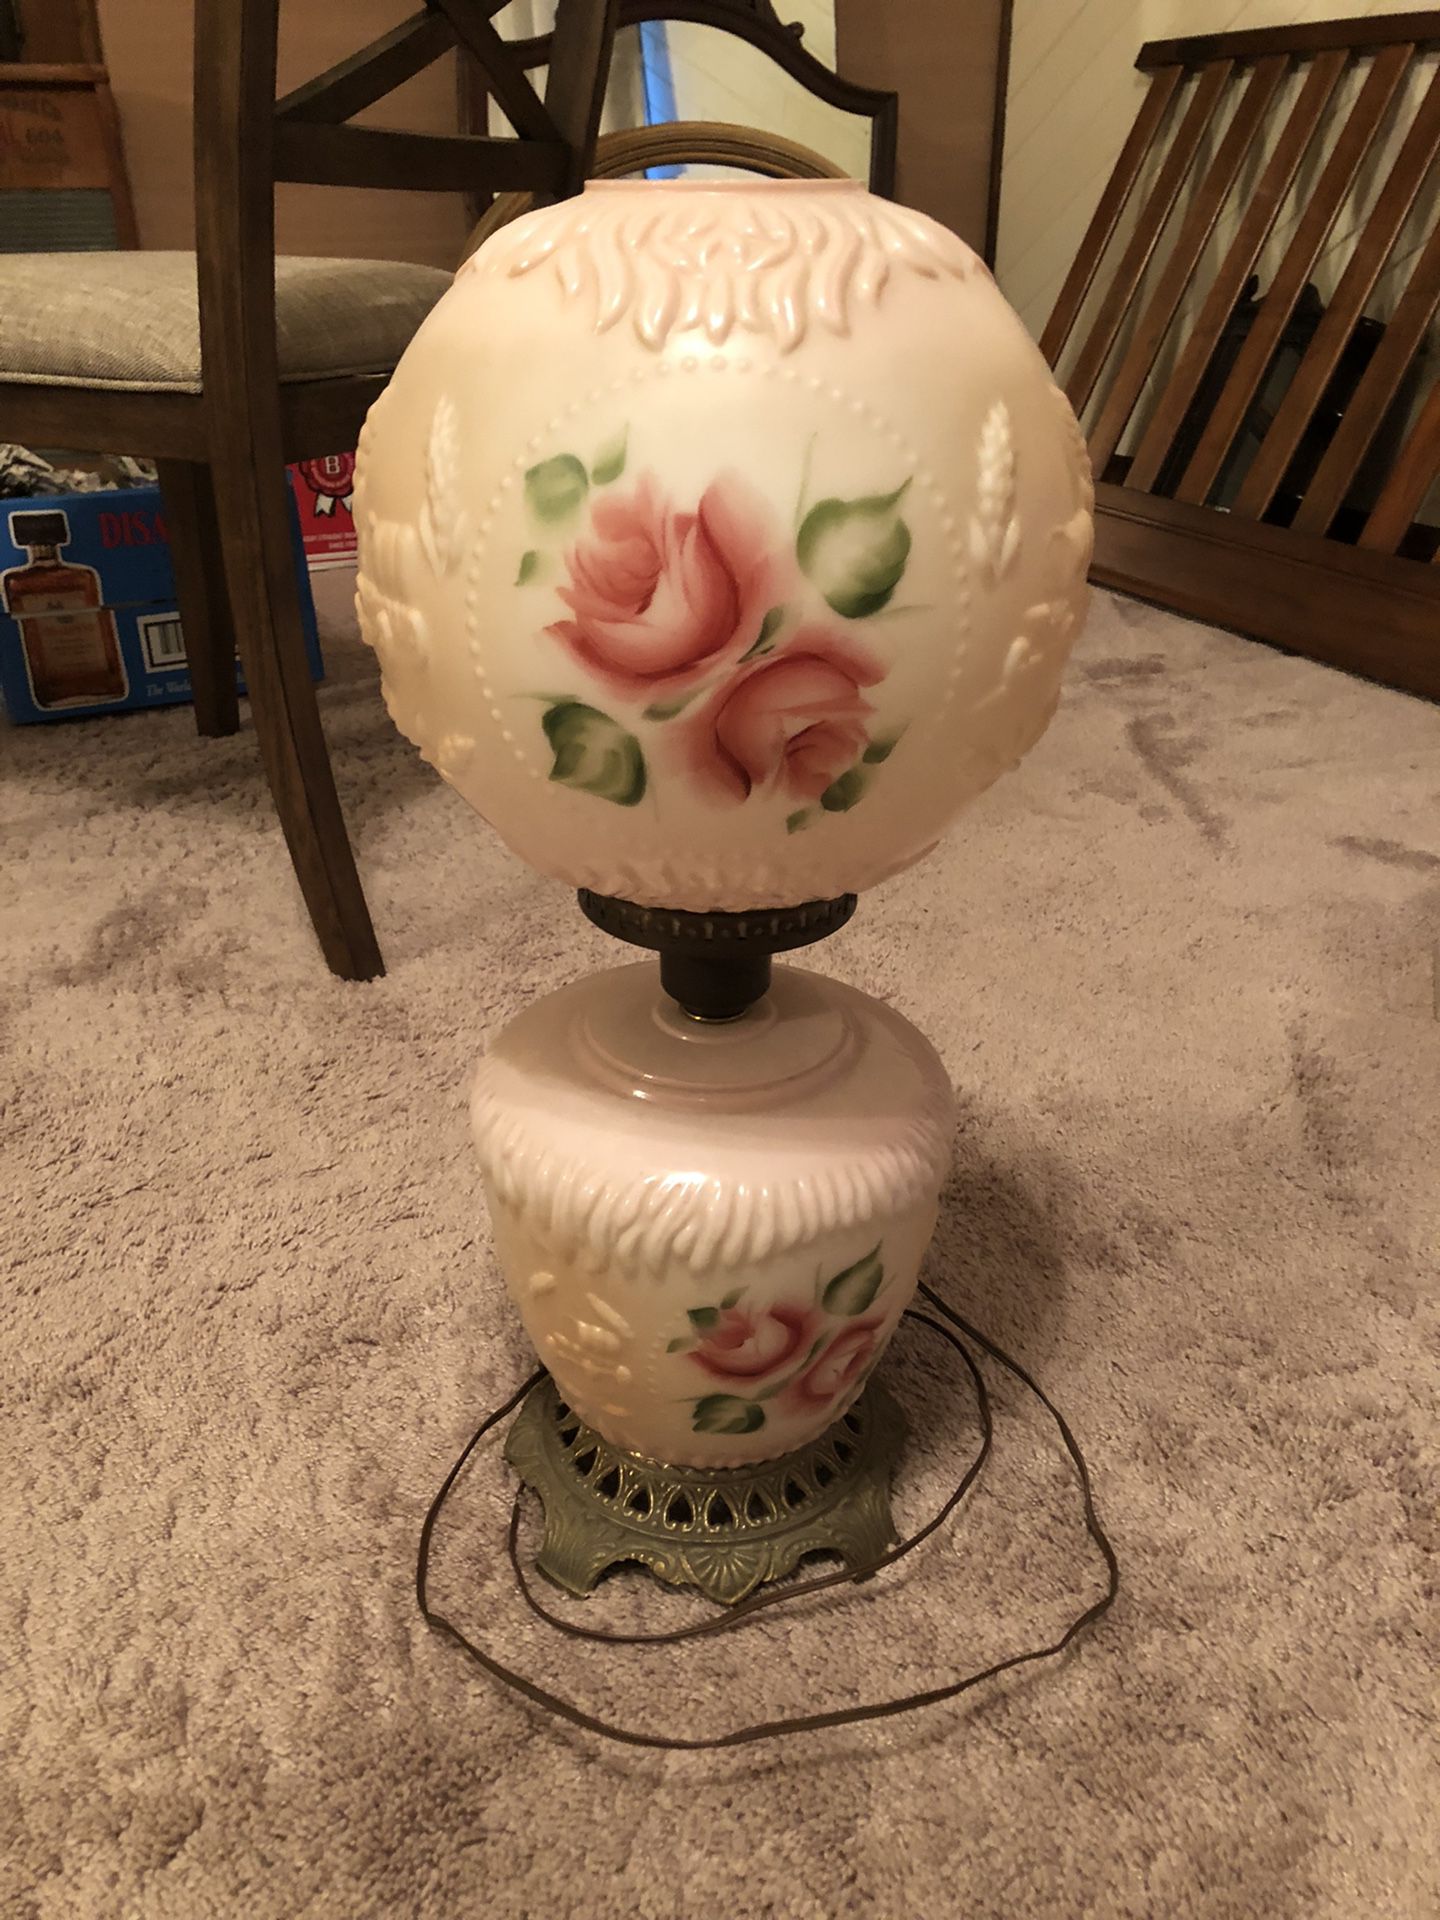 Antique Floral Globe Lamp